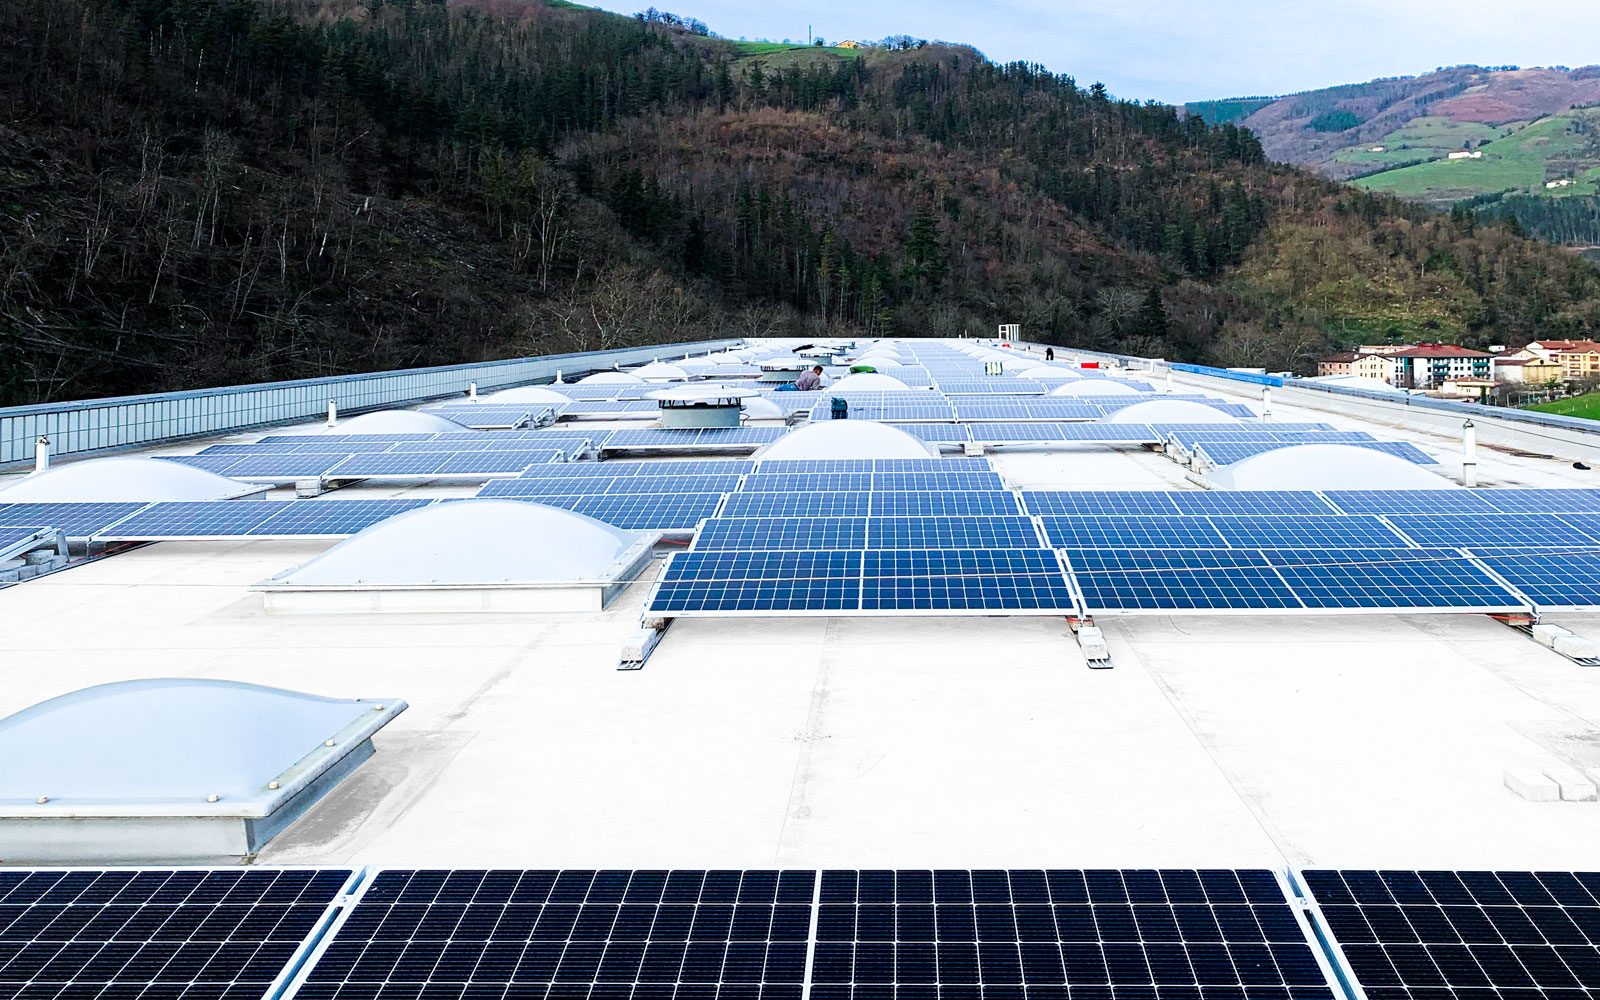 Soraluce installs 820 photovoltaic panels